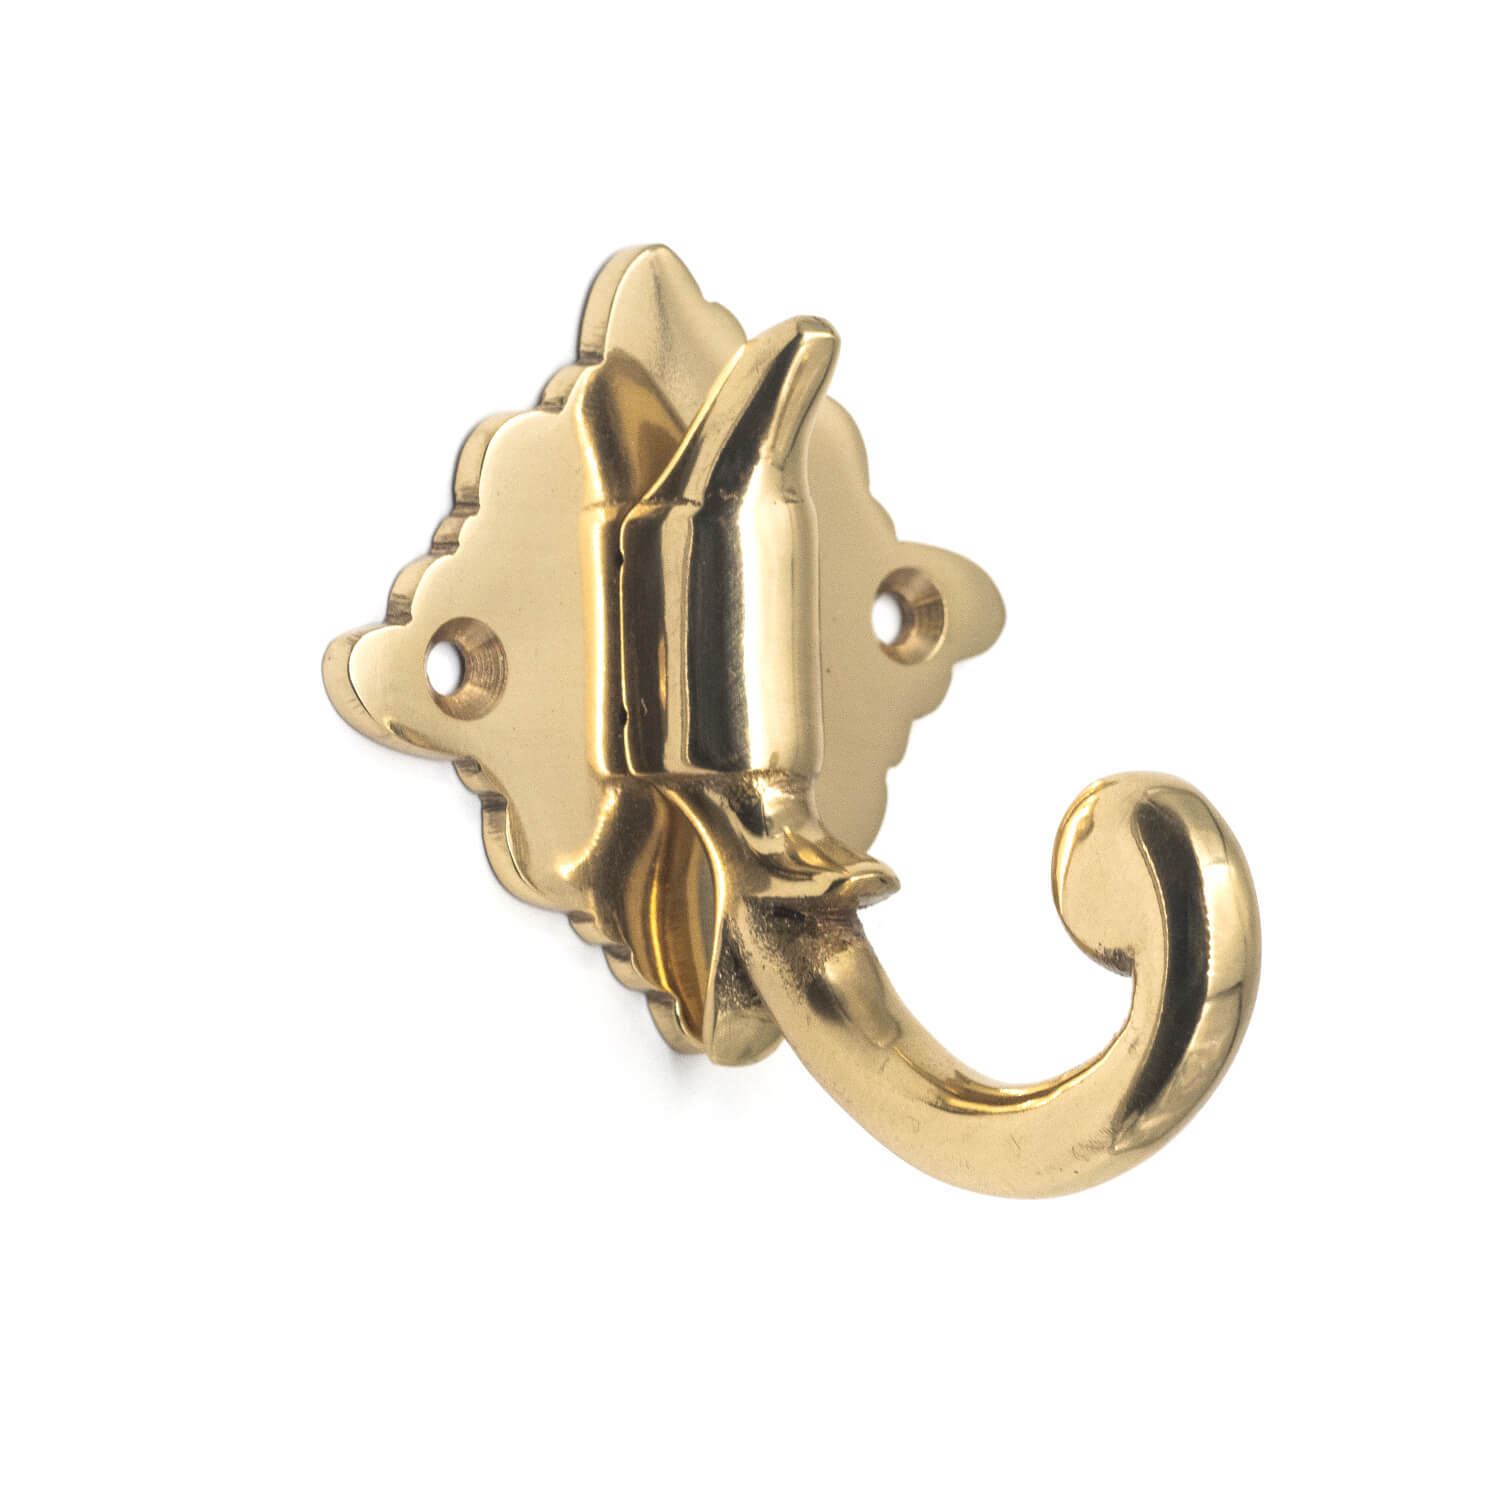 Coat hook - Almue - Brass with lacquer - Model 6535 - Hooks & Hooks -  VillaHus